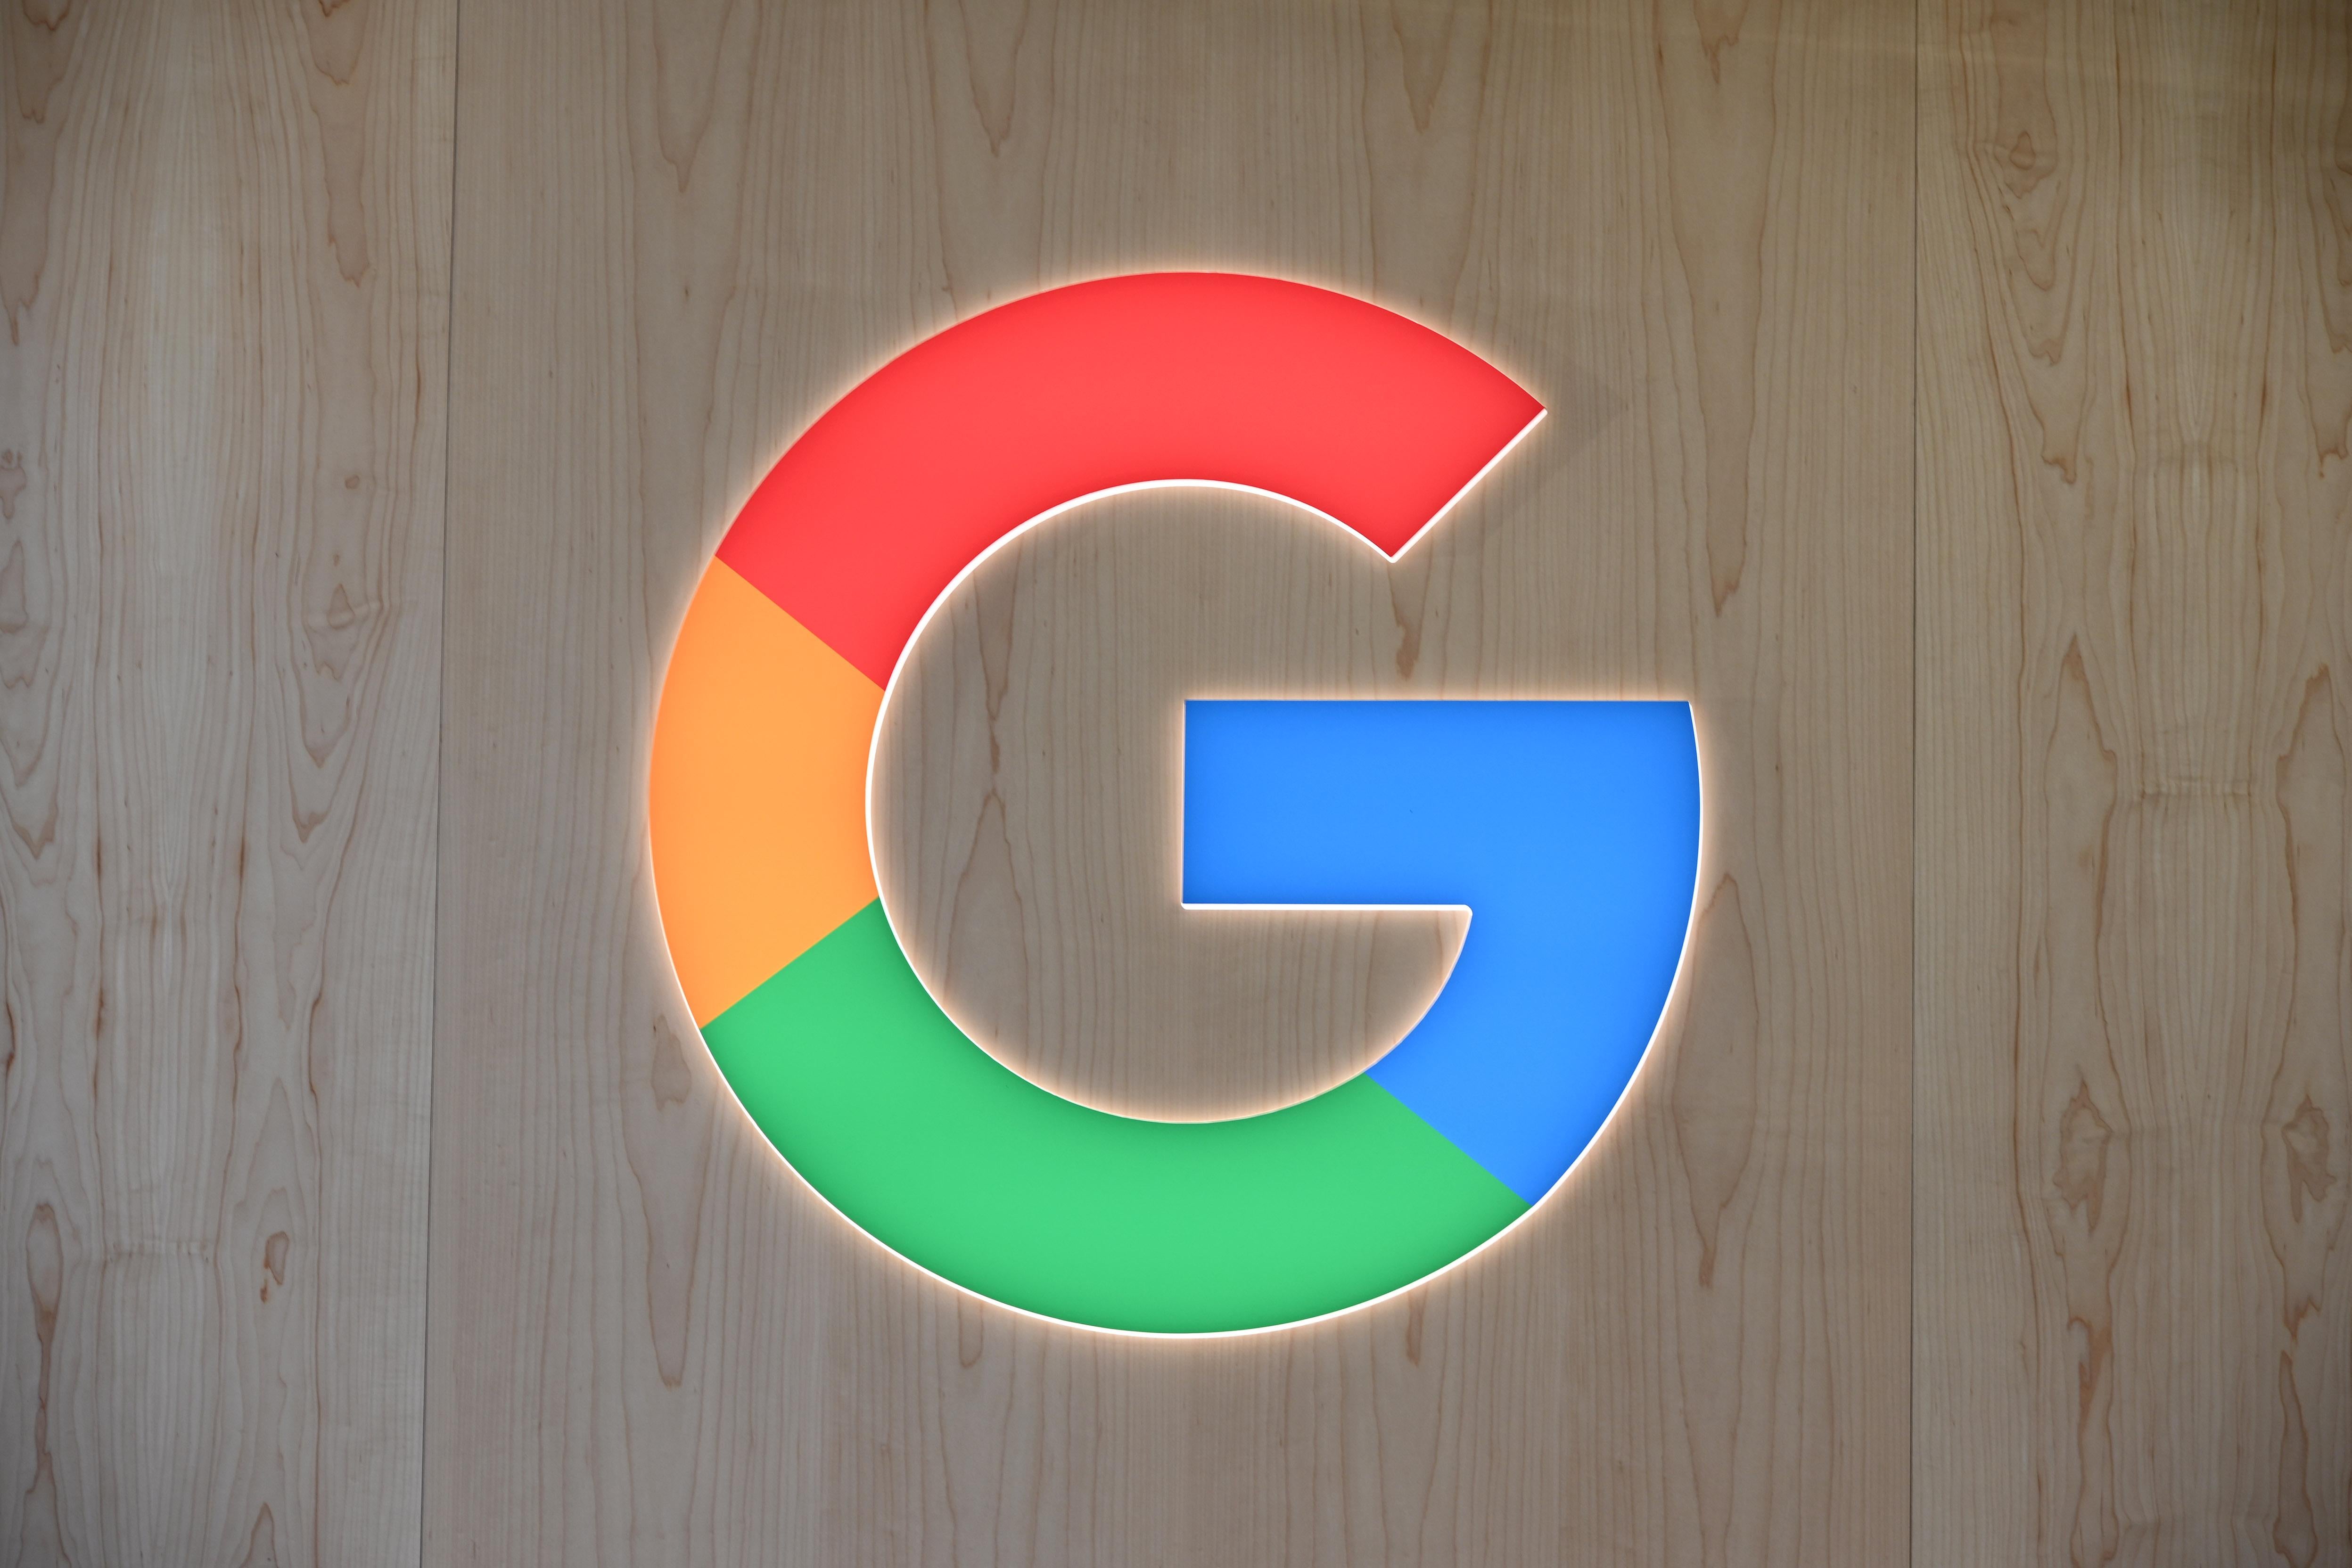 The "G" Google logo against a wood-grain background